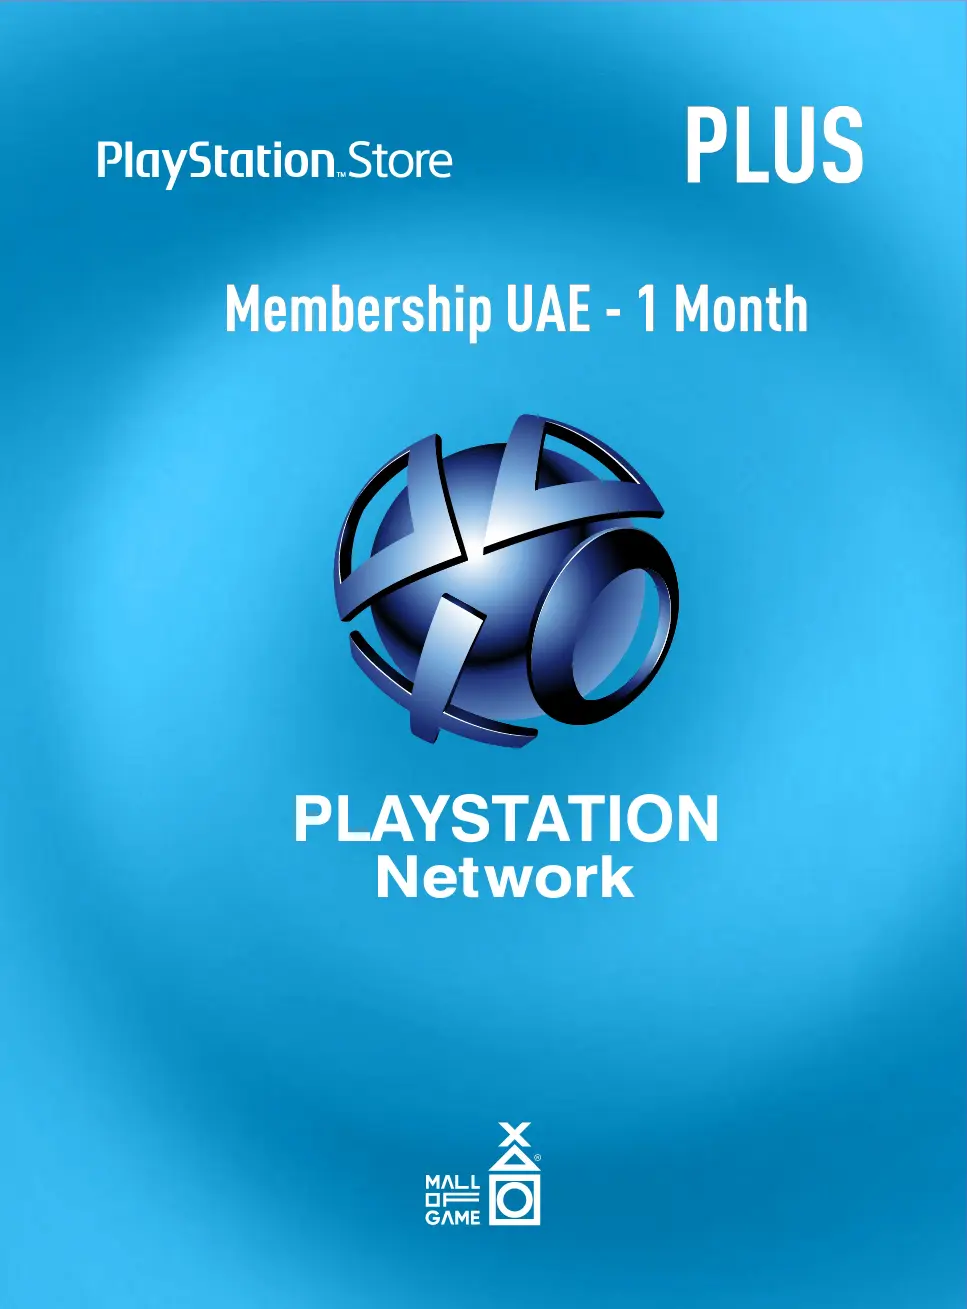 PSN Plus Membership UAE - 1 Month